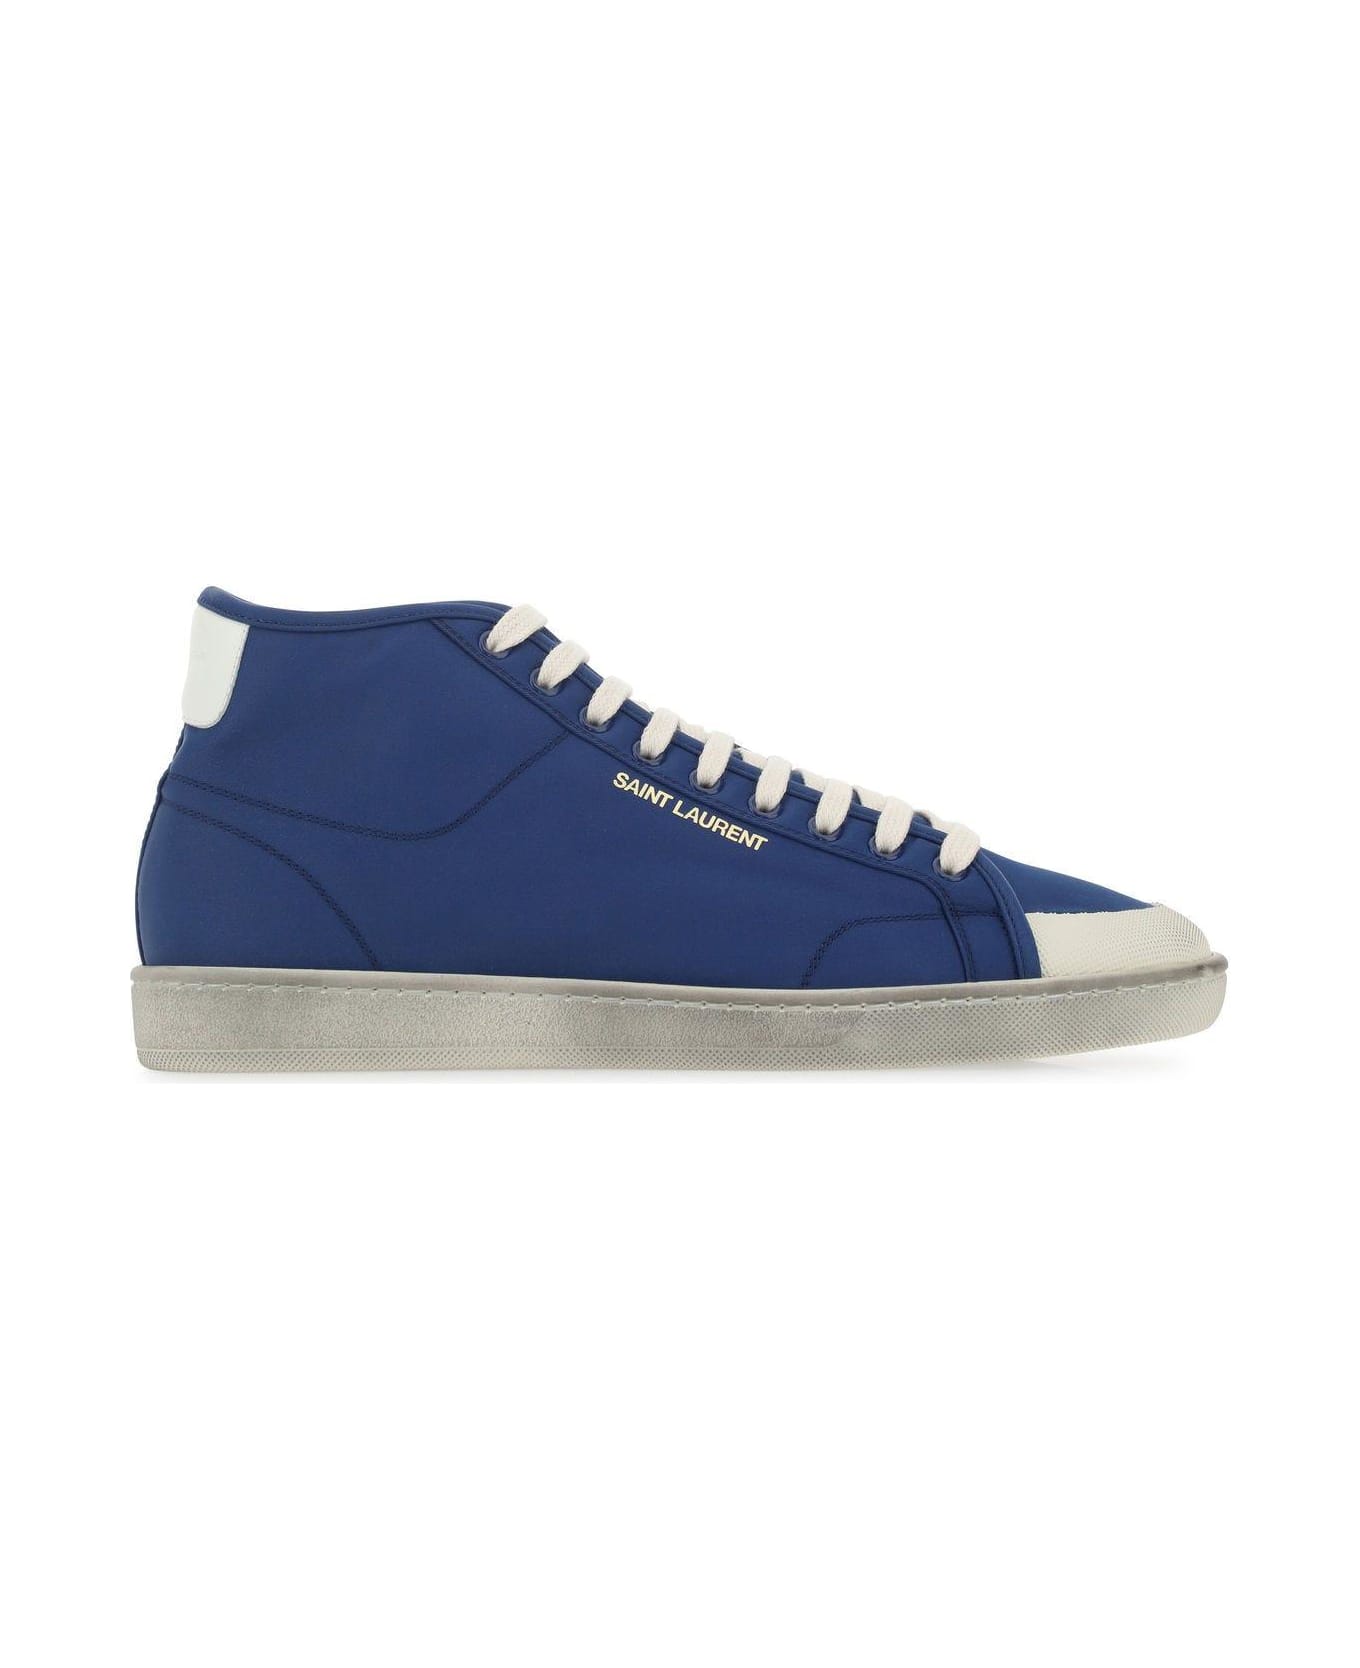 Saint Laurent Nylon Sl/39 Sneakers - Blue